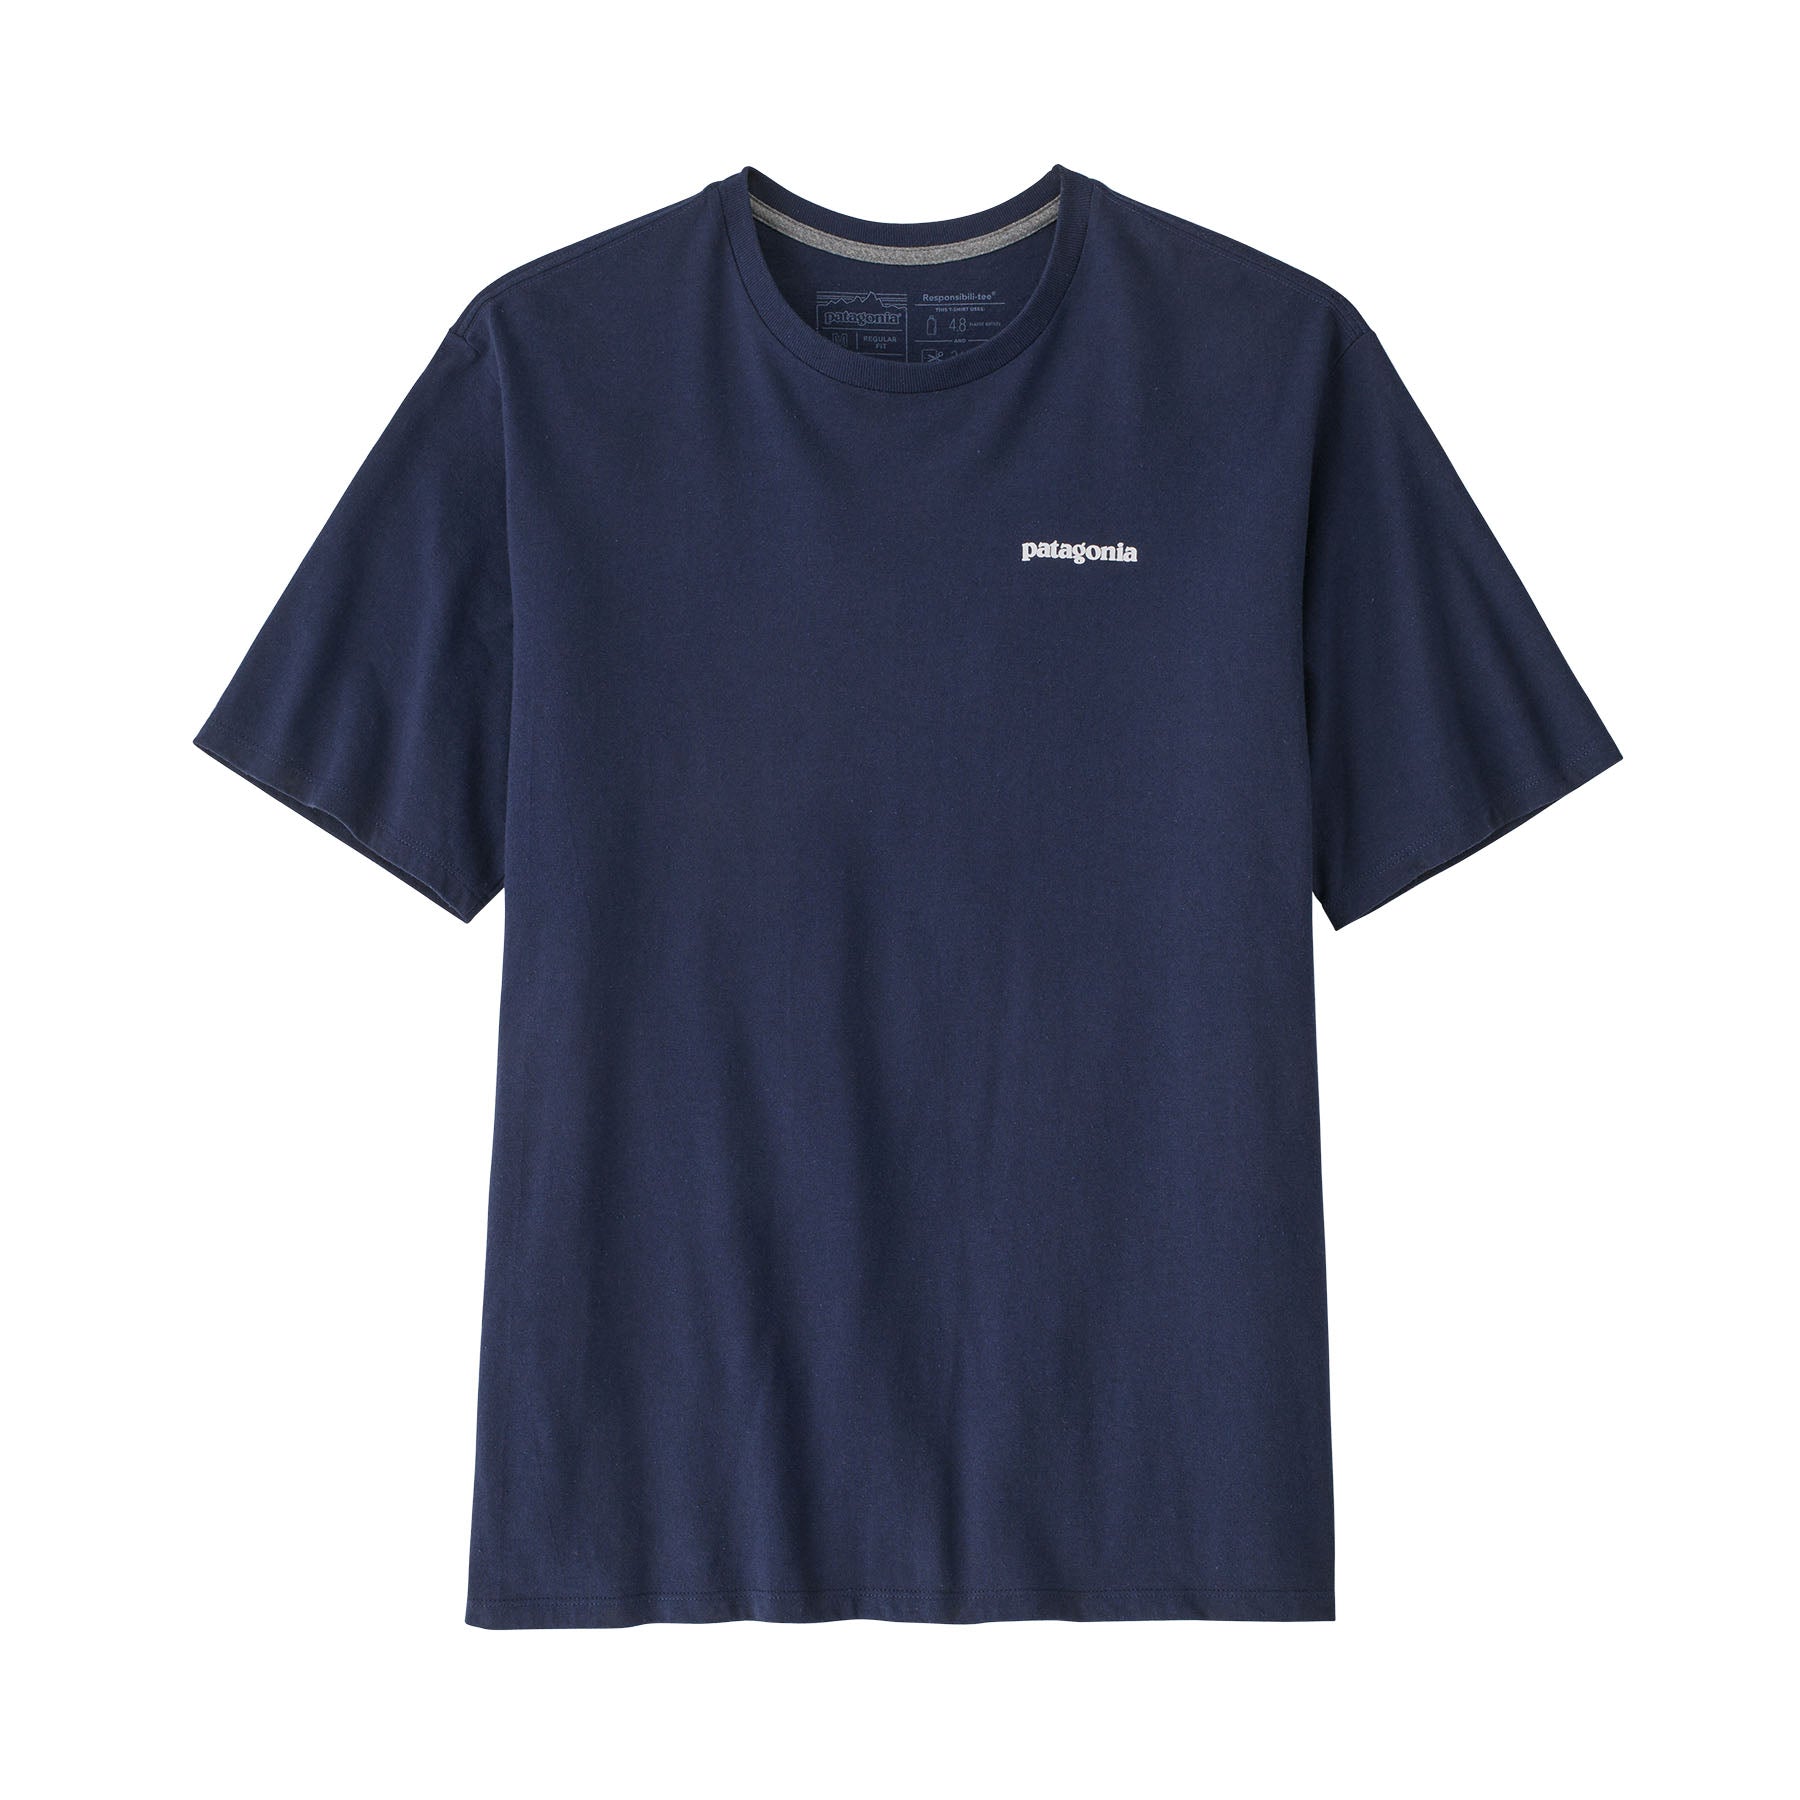 Patagonia P6 Logo Responsibili-Tee T-Shirt - Mens